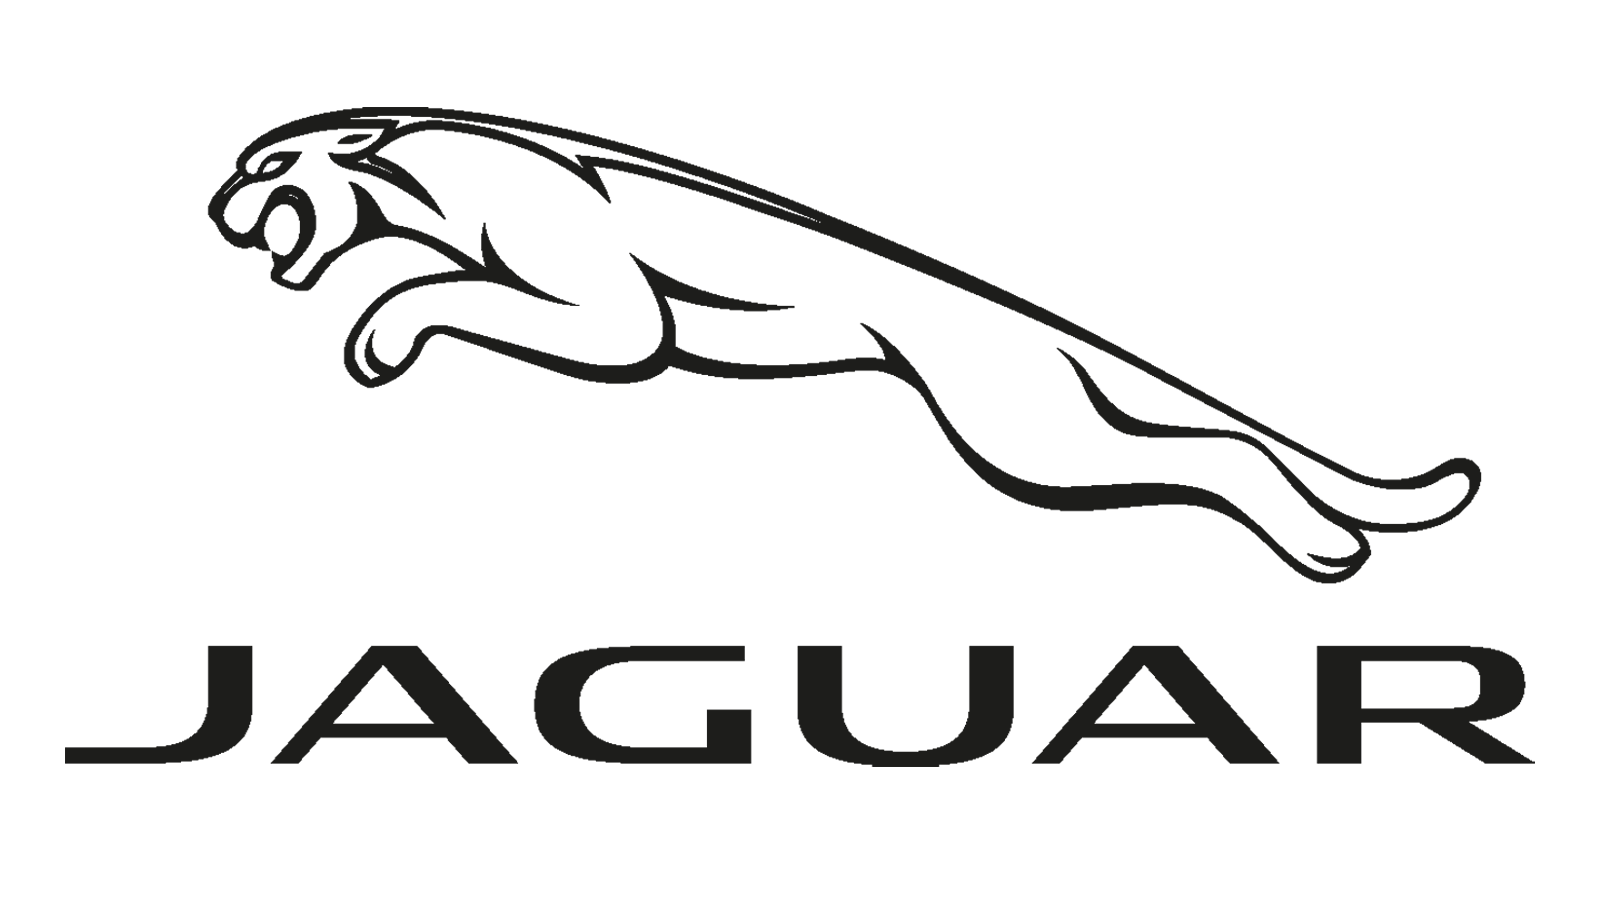 Jaguar Logo and symbol, meaning, history, PNG, brand